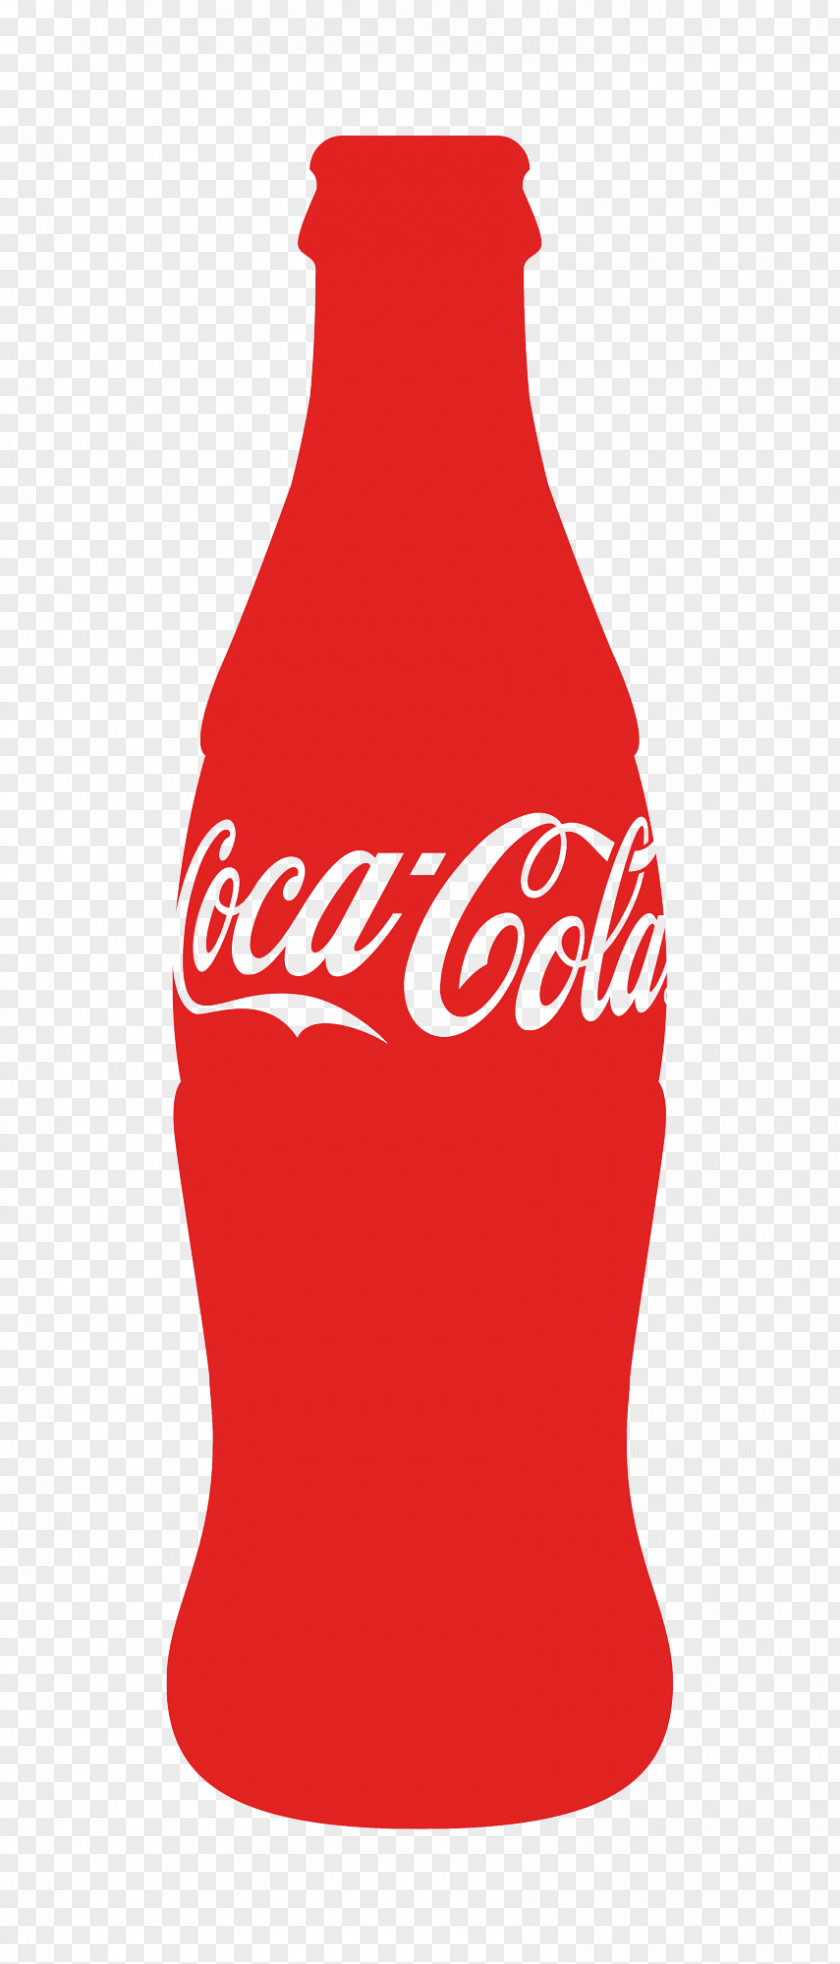 Coca Cola The Coca-Cola Company Fizzy Drinks Sprite Beverages Florida PNG